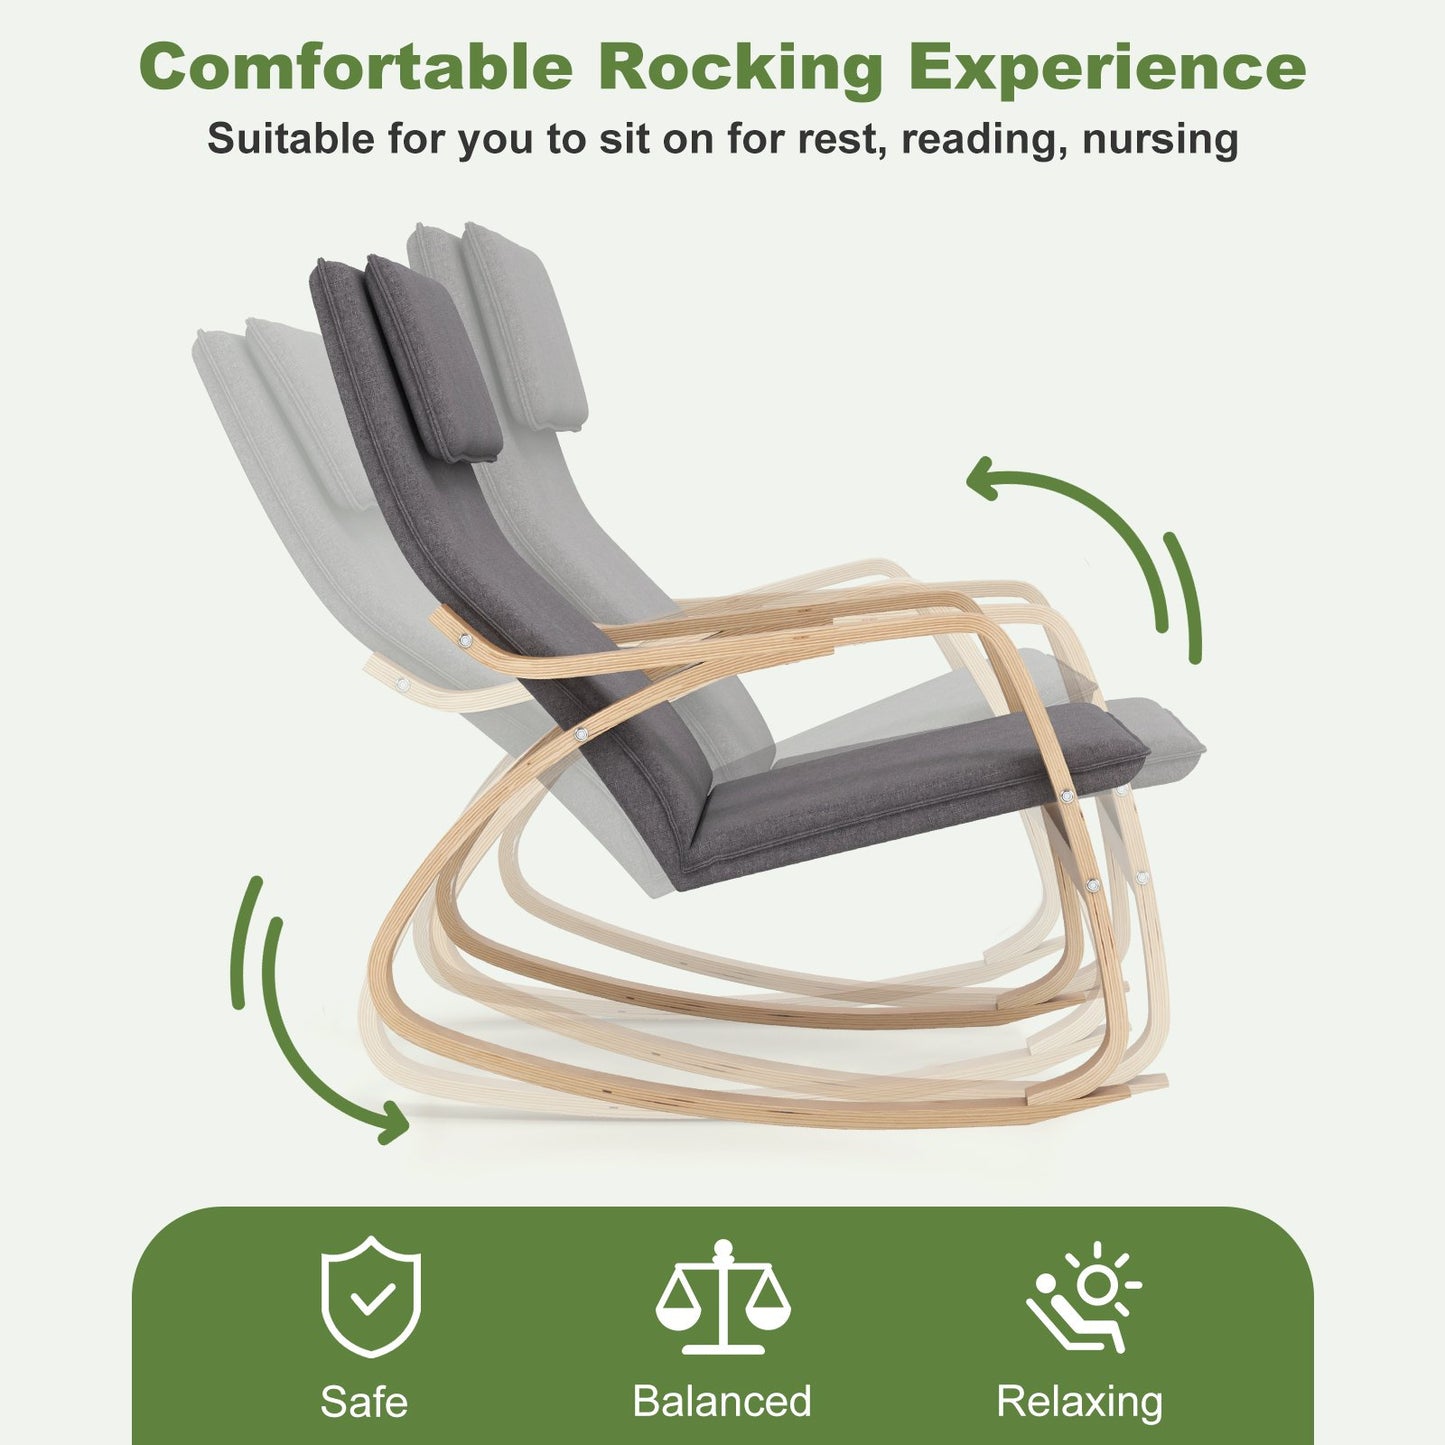 Modern Bentwood Rocking Chair Fabric Upholstered Relax Rocker Lounge Chair, Gray